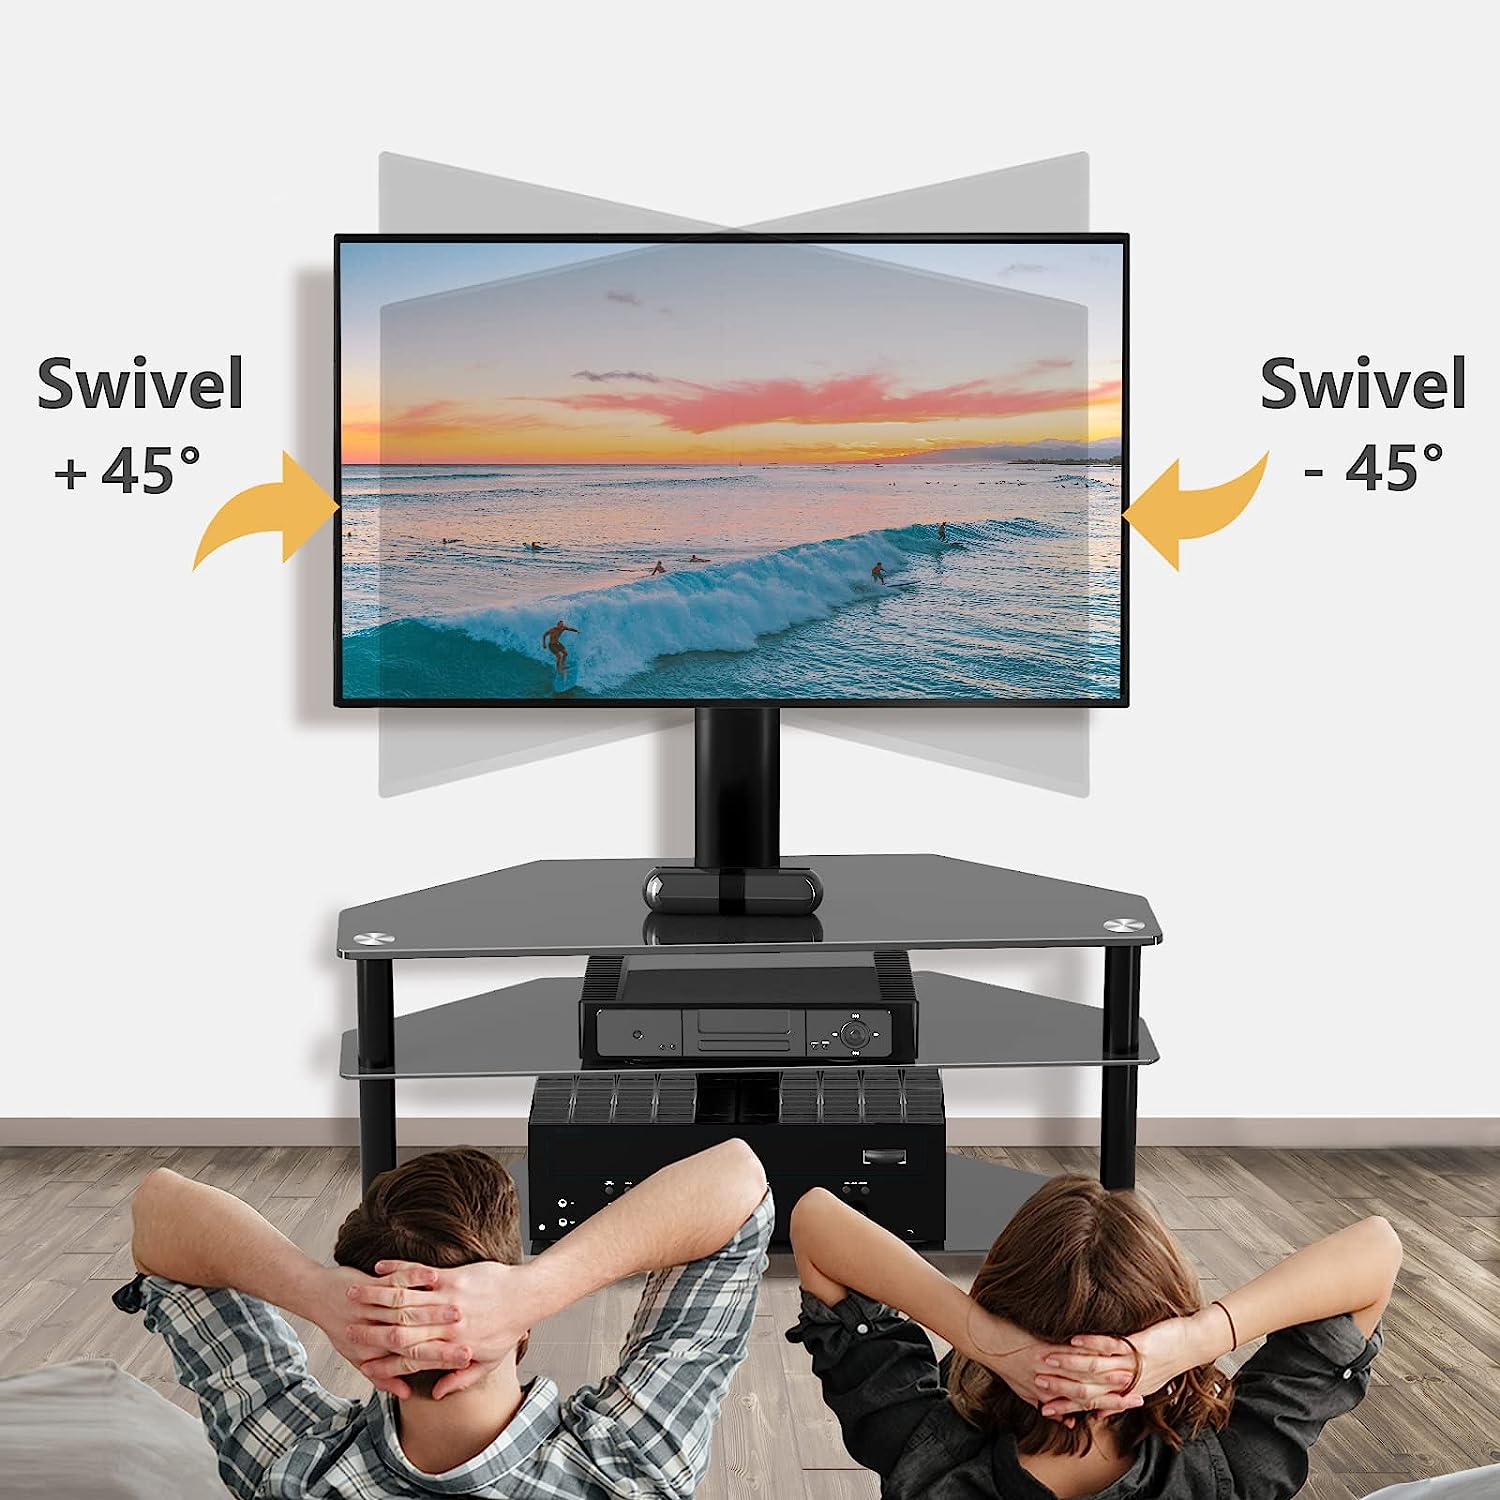 Soporte de TV de suelo con soporte giratorio para pantallas planas LED LCD  de 32 a 75 pulgadas, televisores curvados de hasta 110 libras, soporte de